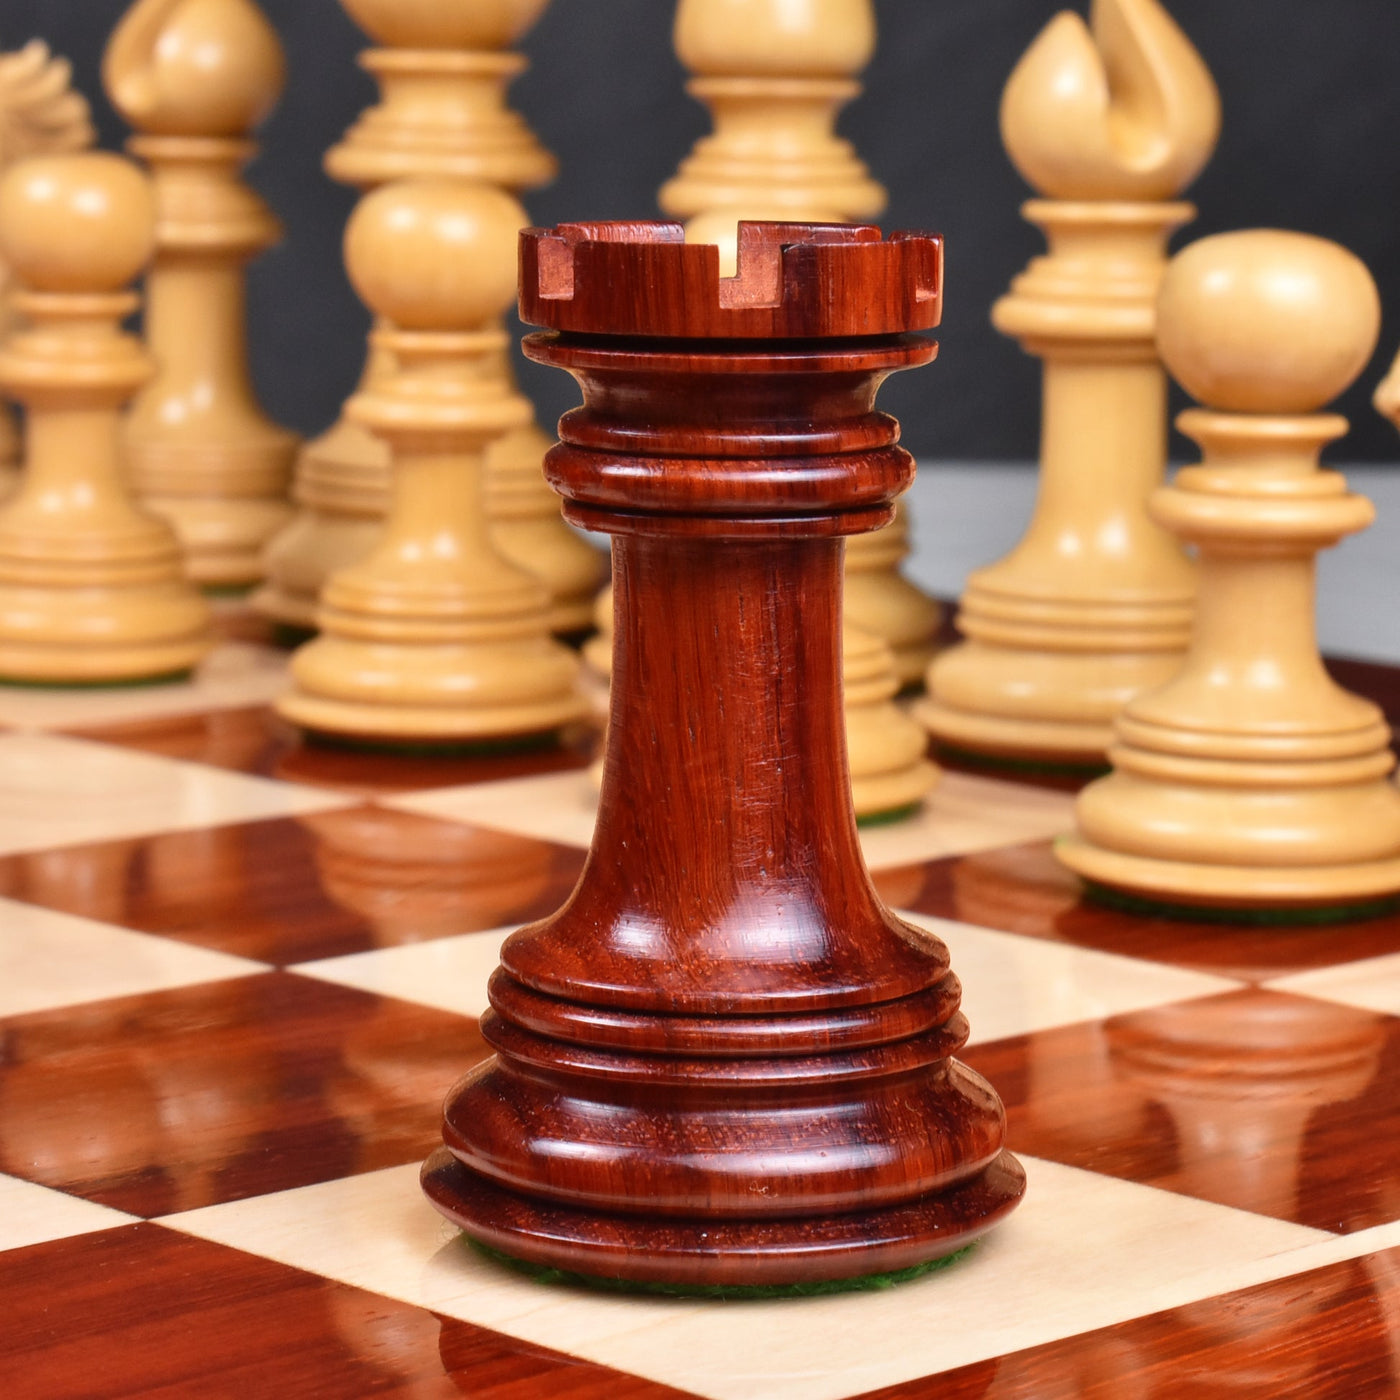 Slightly Imperfect 4.6" Arthur Luxury Staunton Chess Pieces Only set